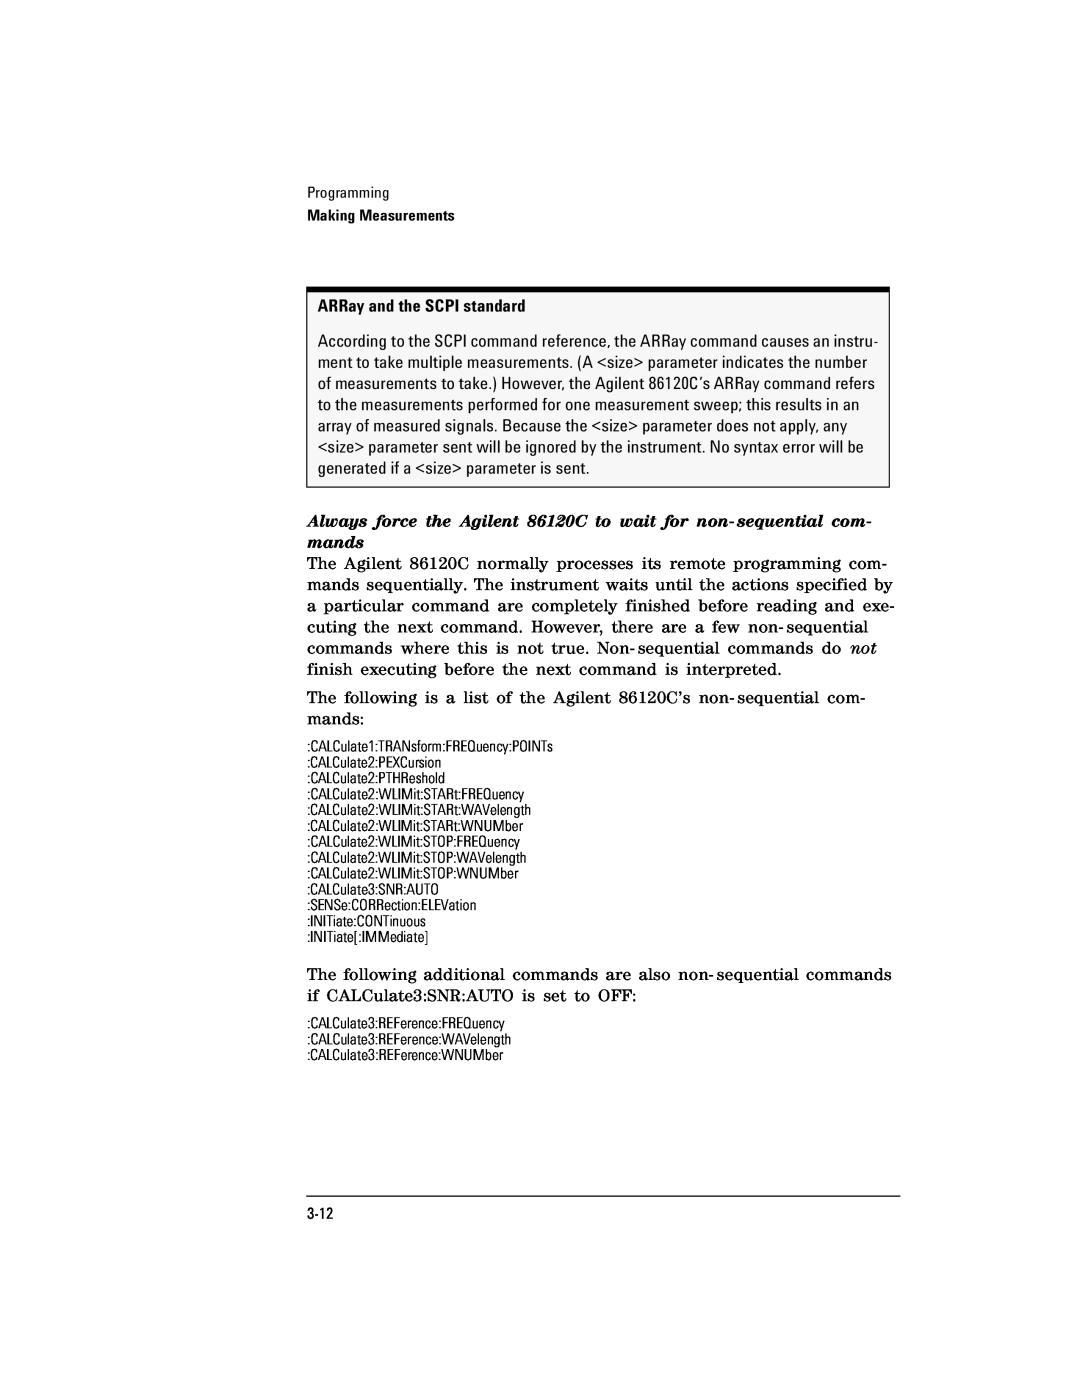 Agilent Technologies Agilent 86120C manual ARRay and the SCPI standard 